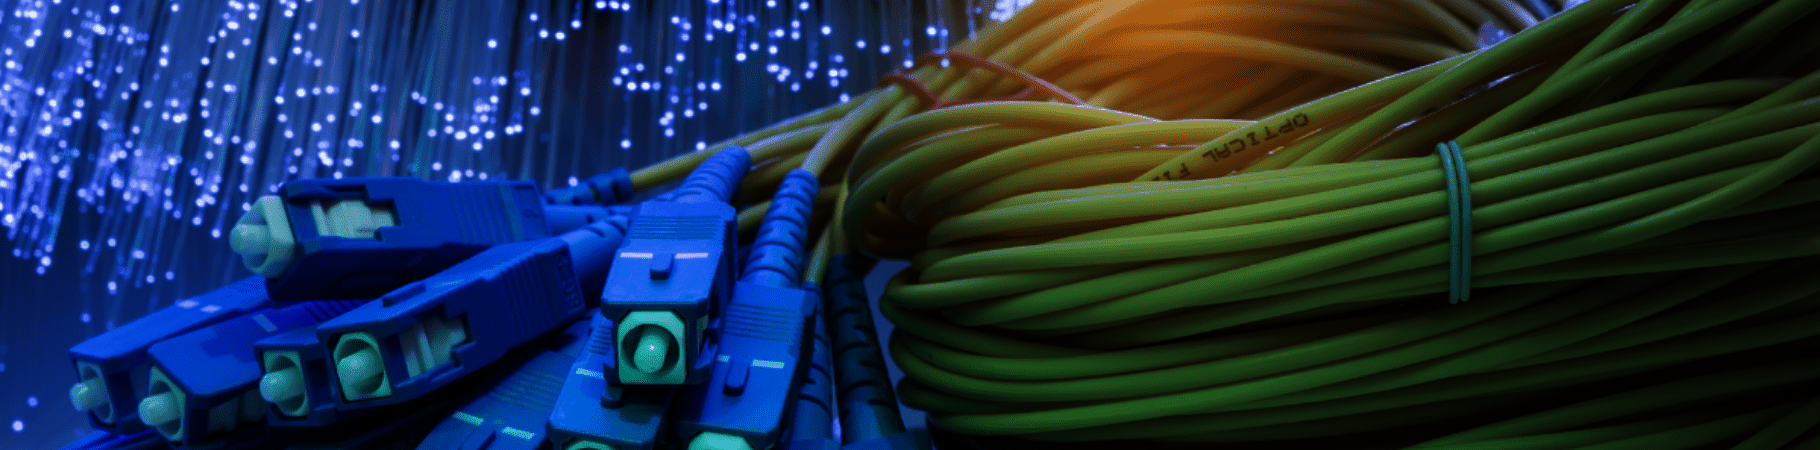  An assortment of various fiber optic cables bundled together over a blue background